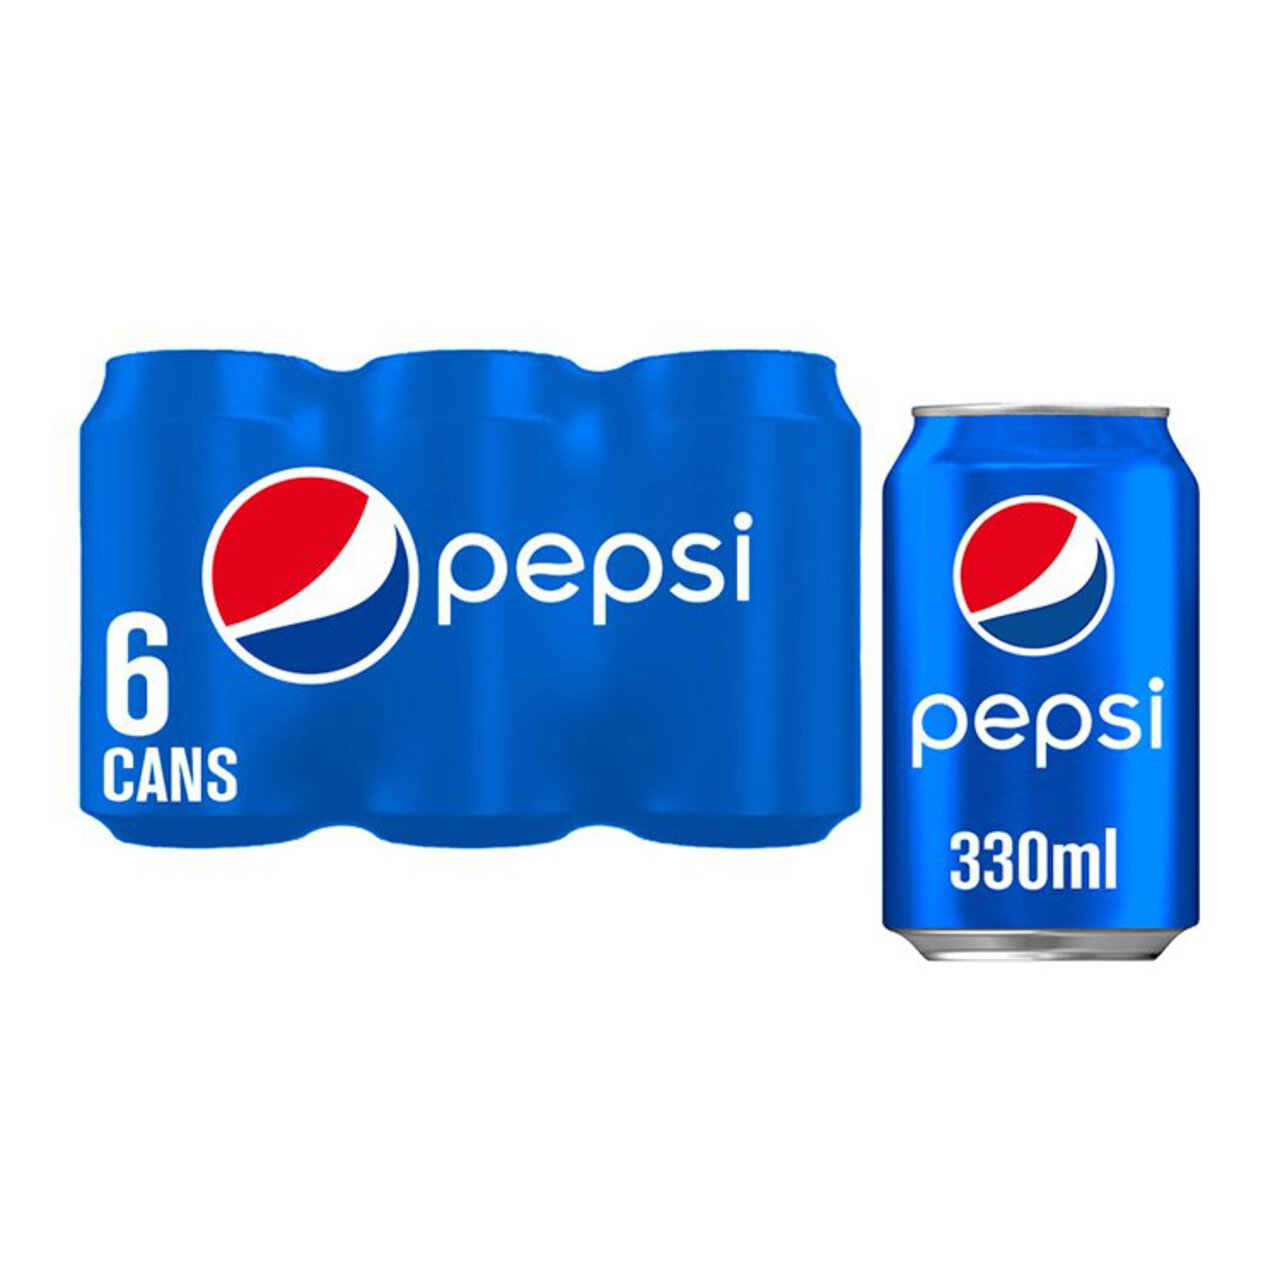 Pepsi 6x330ml 6 x 330ml